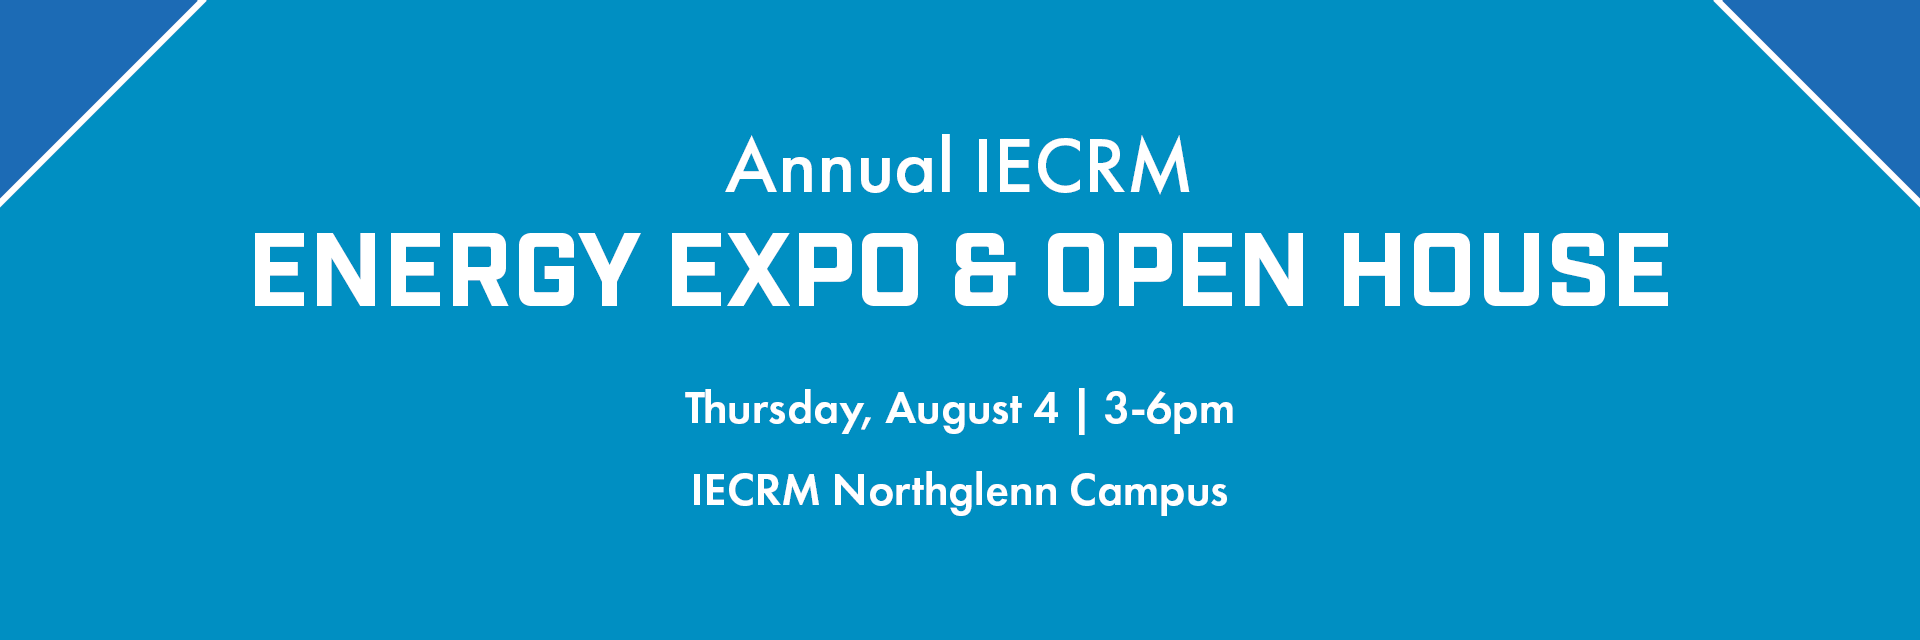 IECRM Energy Expo & Open House 